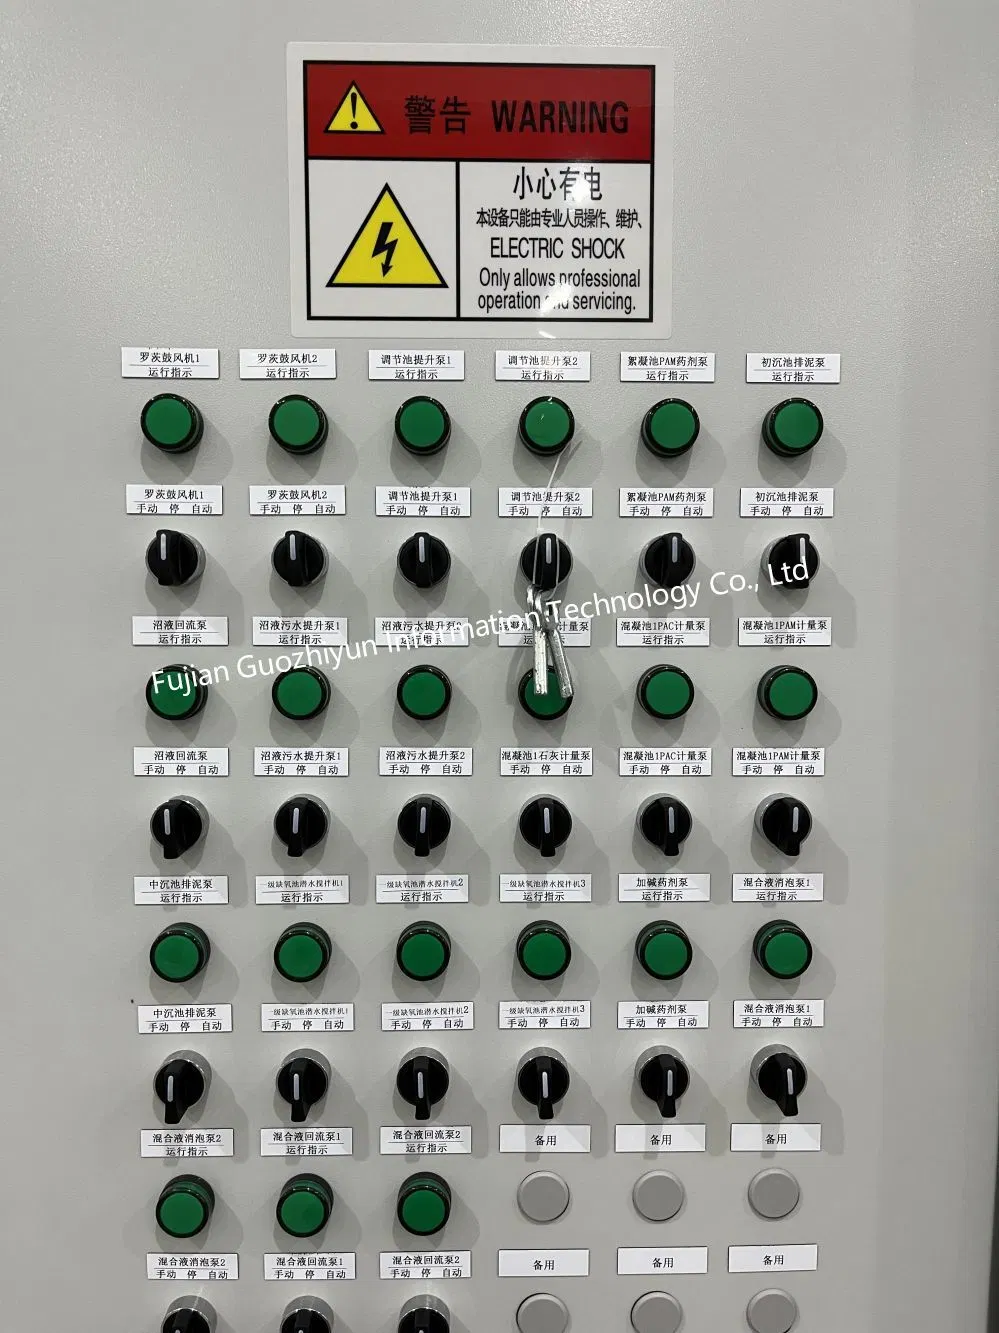 PLC Control Cabinet Logic Program Electrical Panel Board Switch